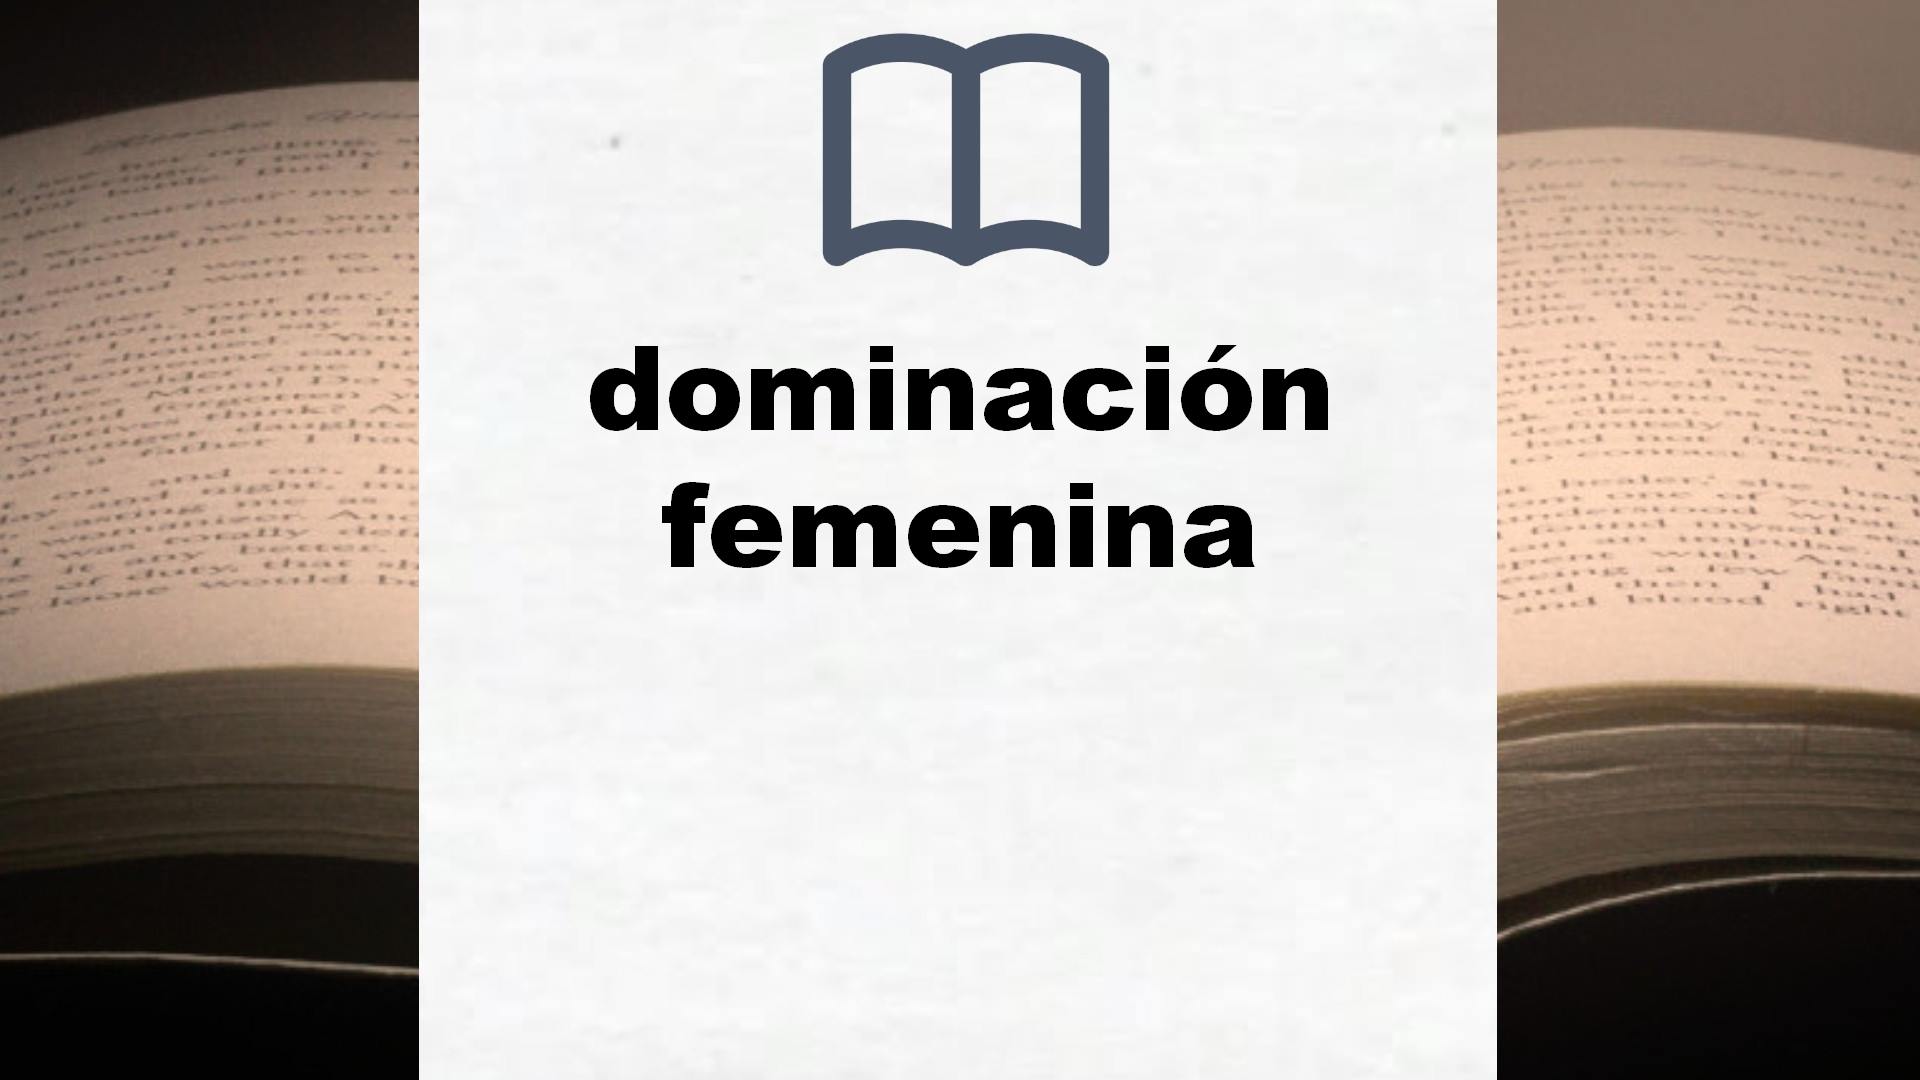 Libros sobre dominación femenina